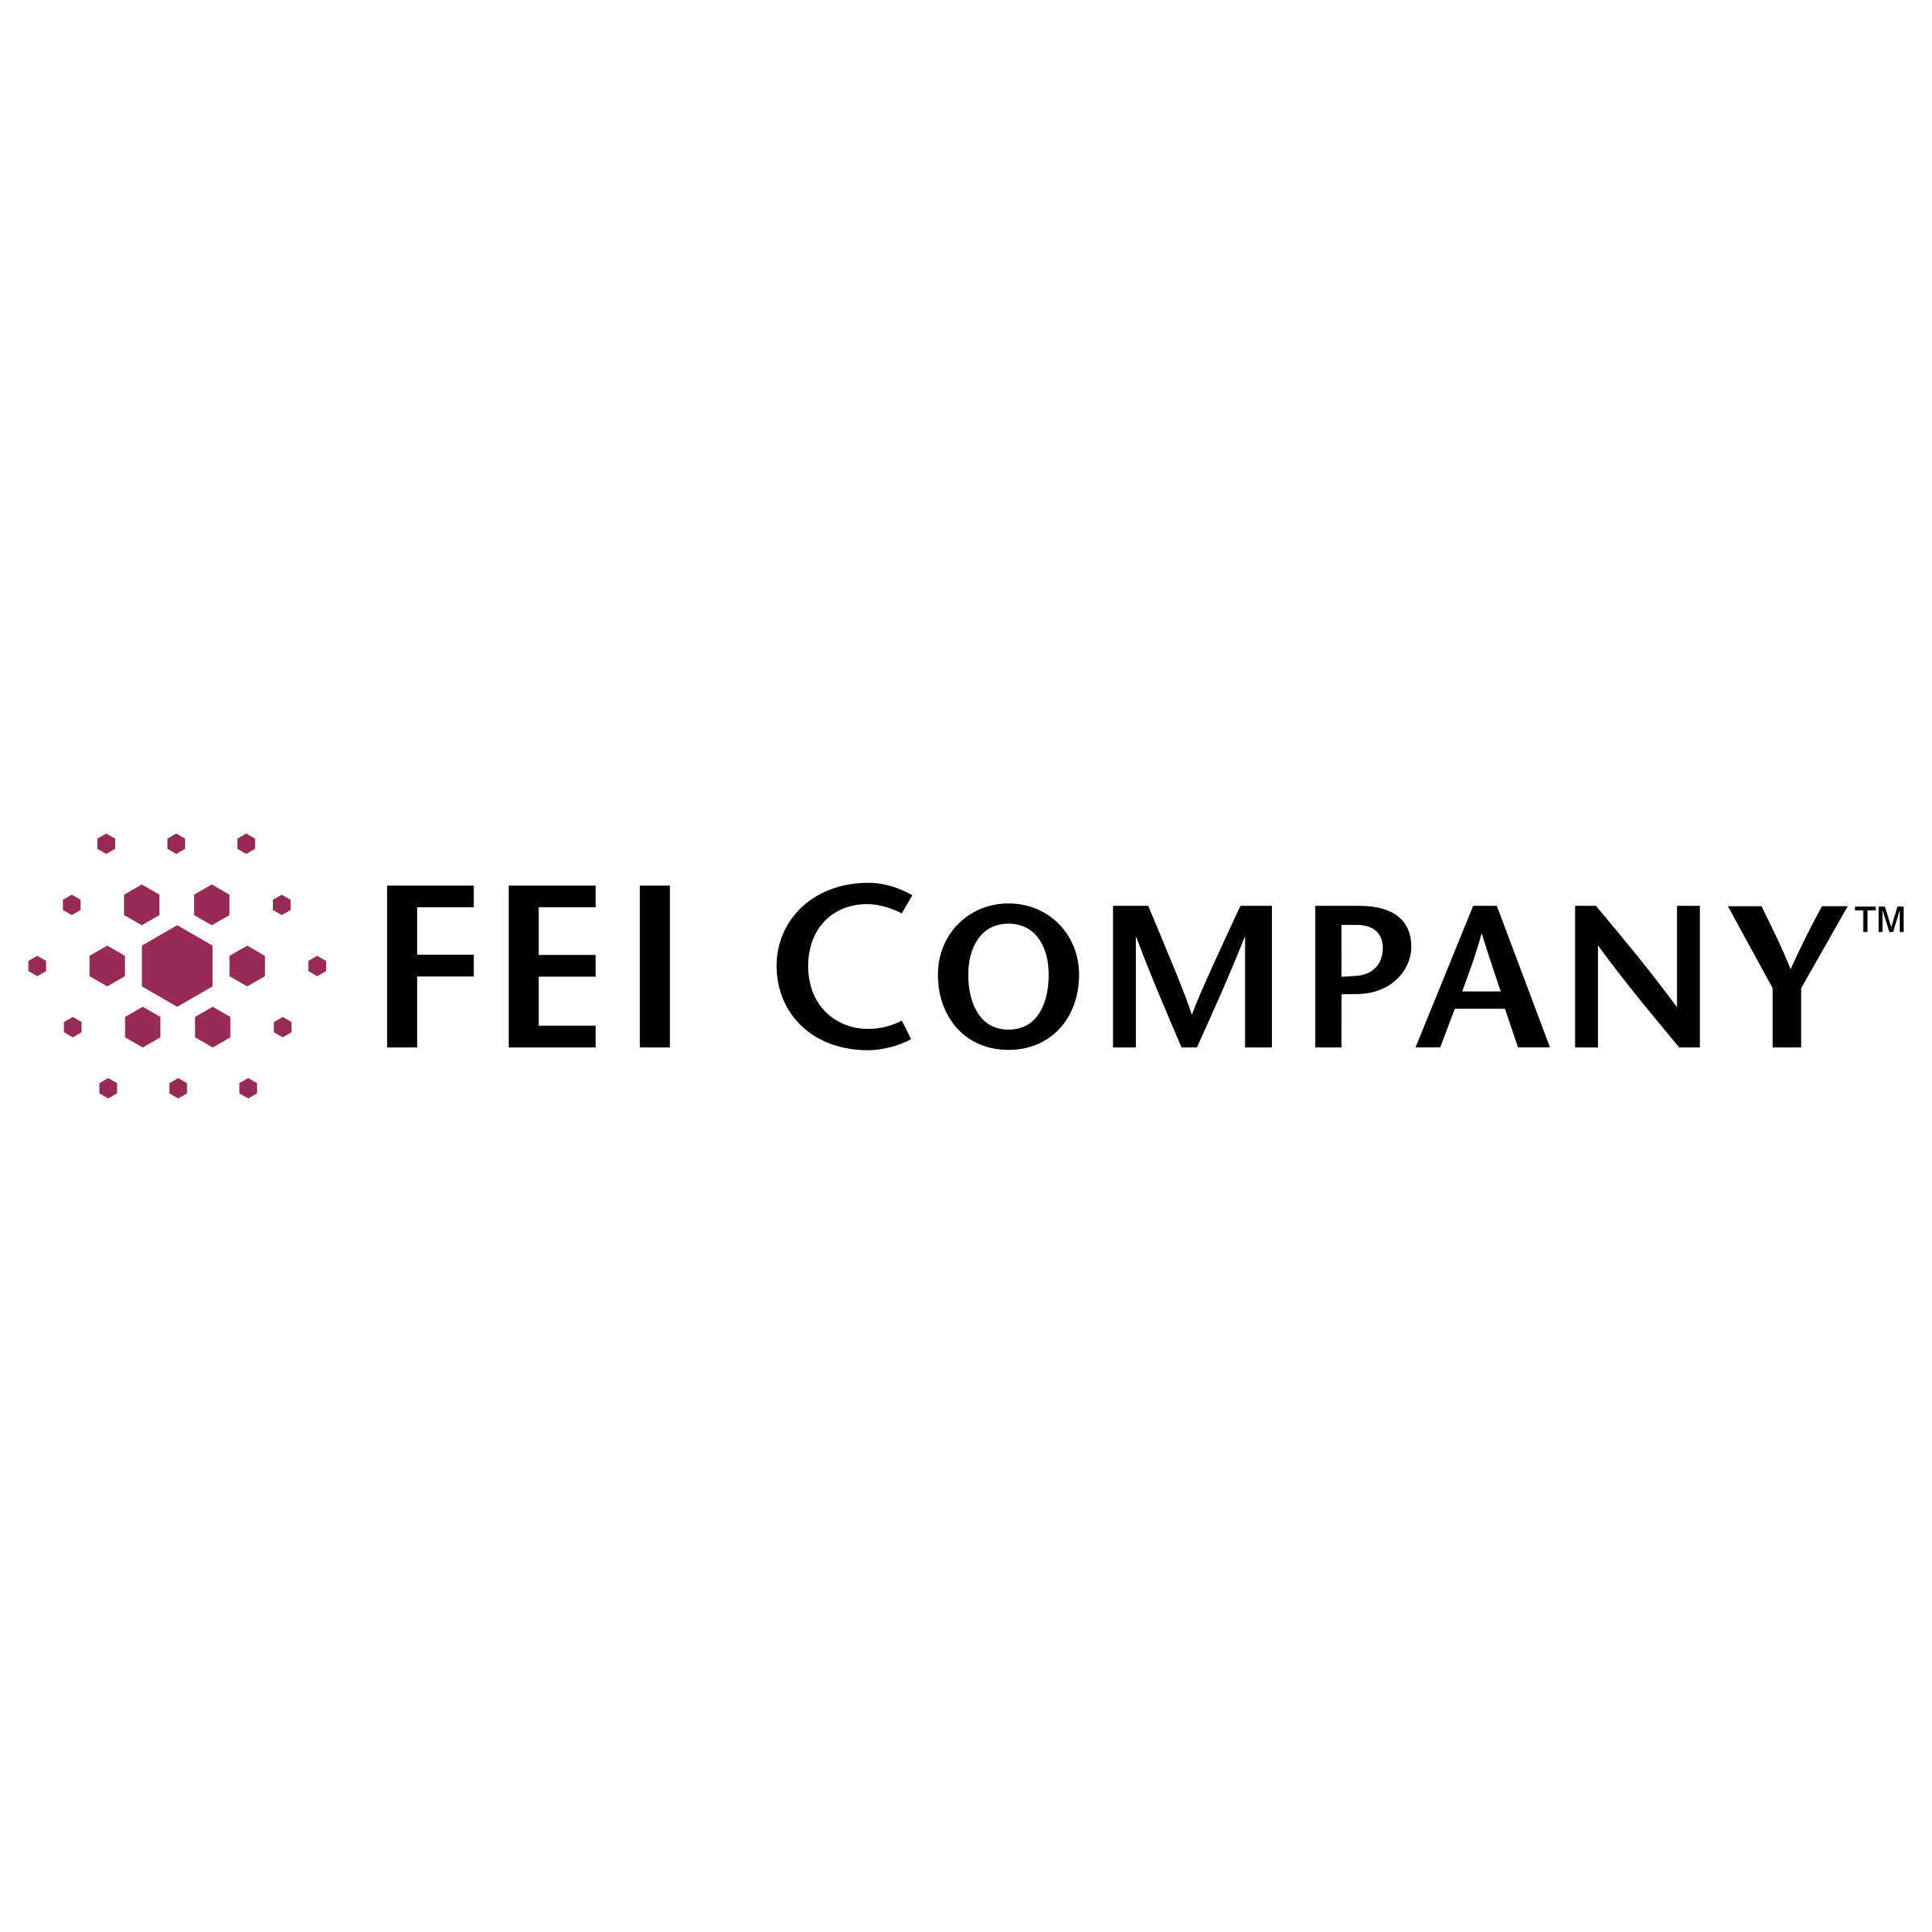 Fei Logo - FEI Company Logo PNG Transparent & SVG Vector